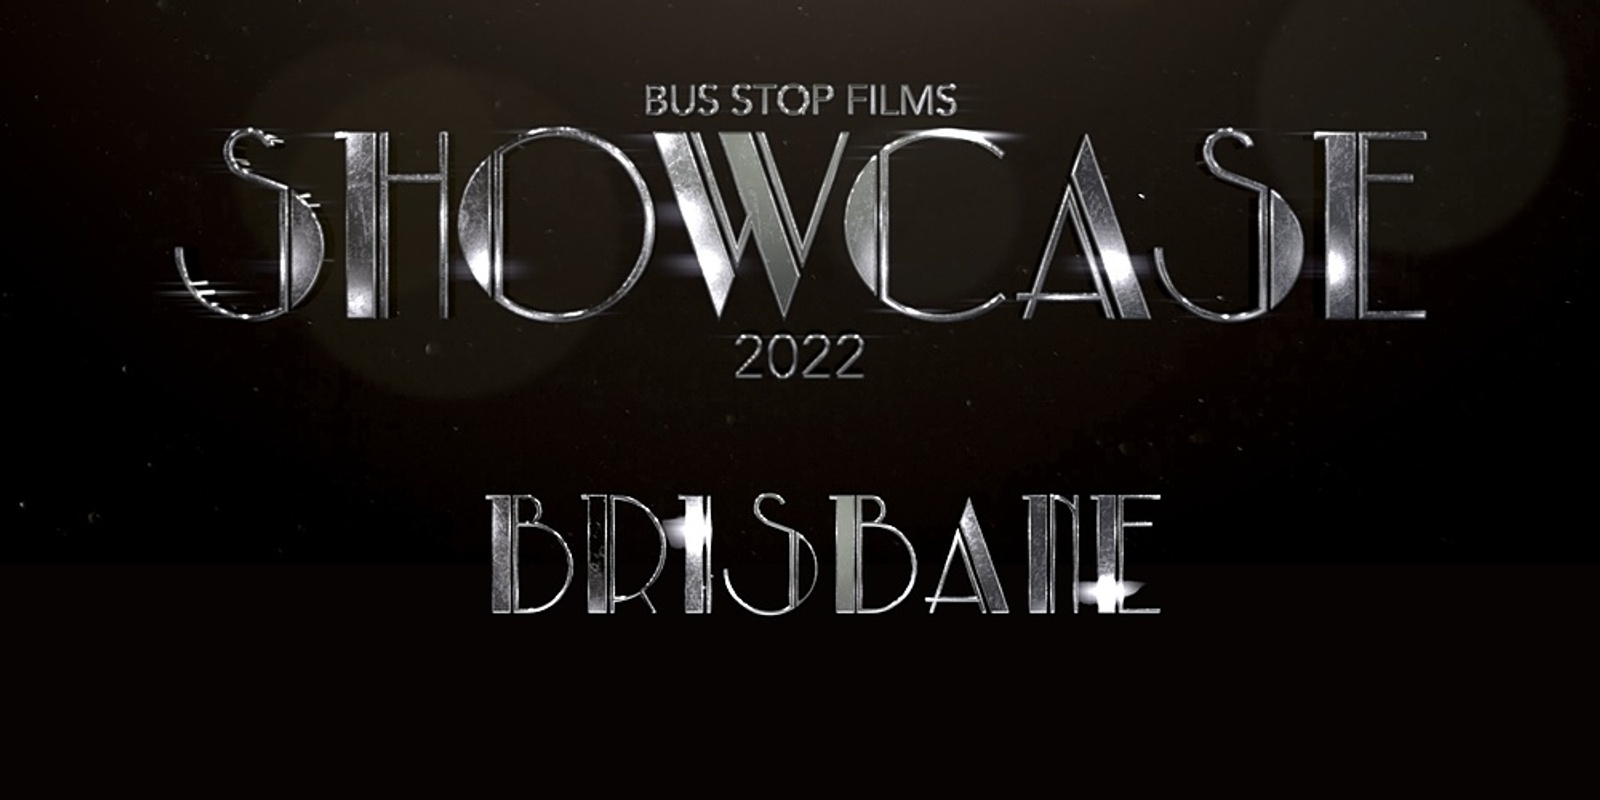 Banner image for Bus Stop Films Brisbane Showcase 2022